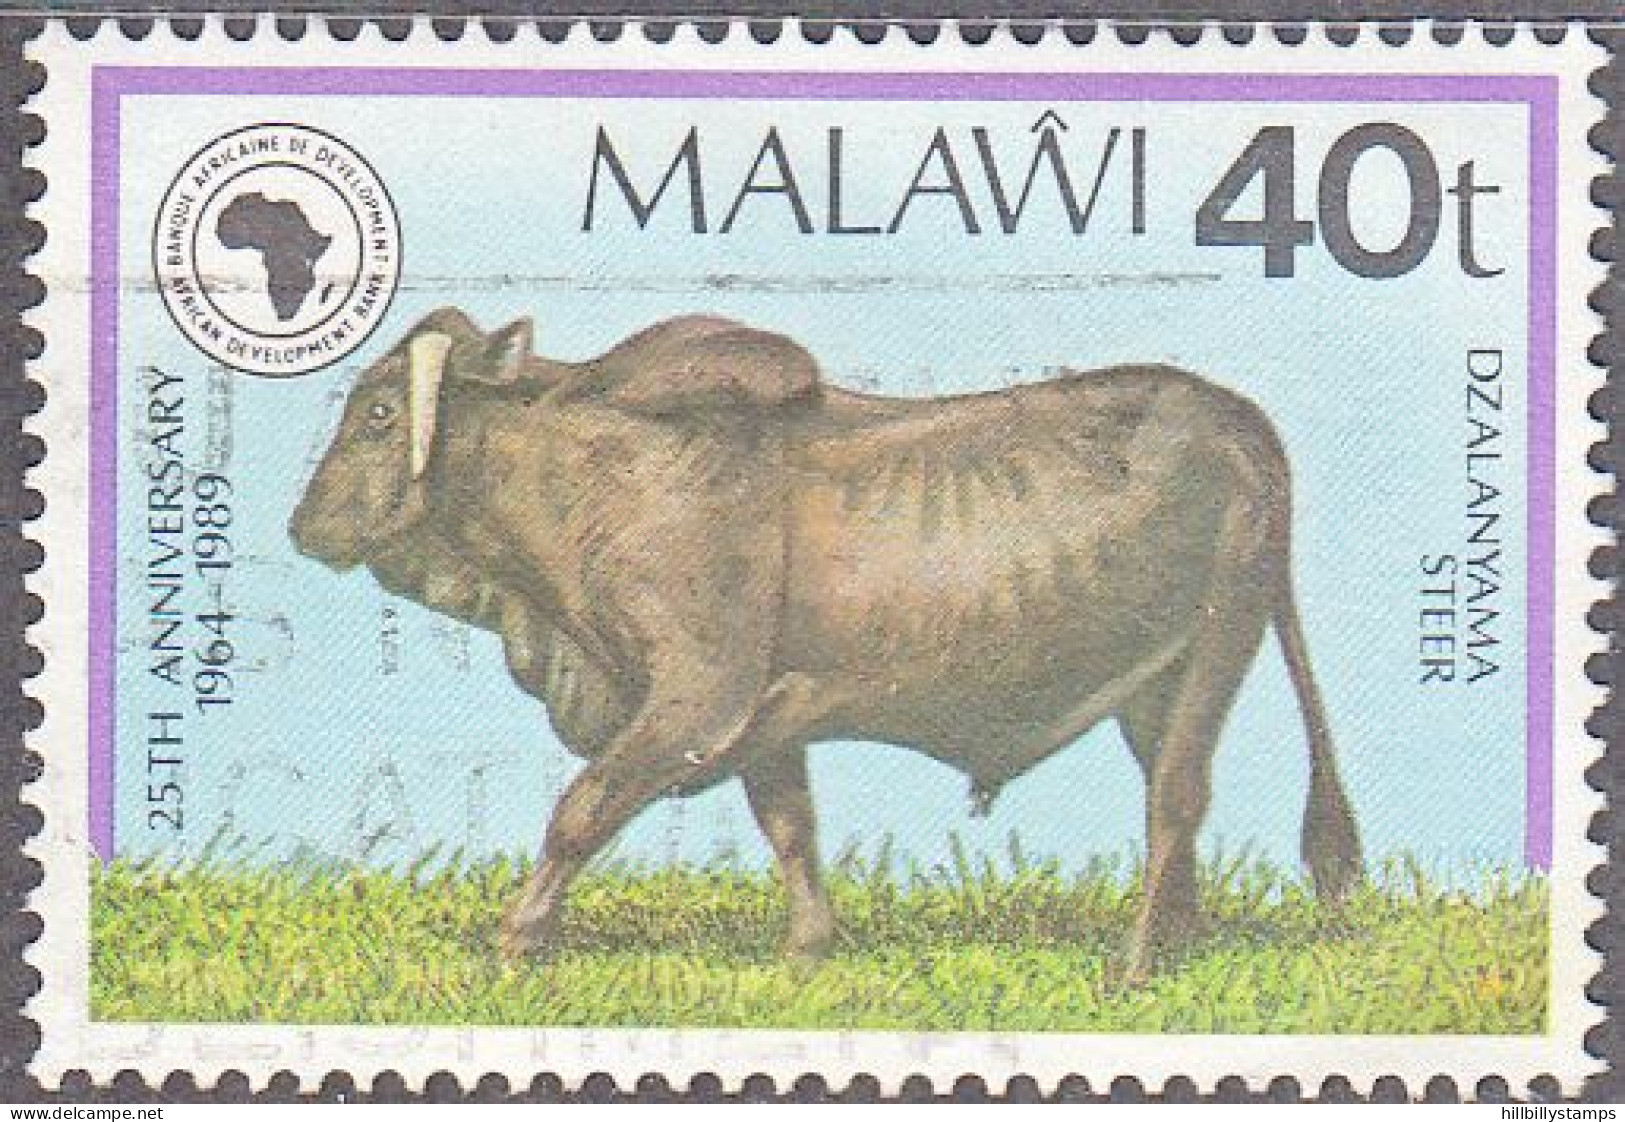 MALAWI    SCOTT NO 551  USED  YEAR 1989 - Malawi (1964-...)